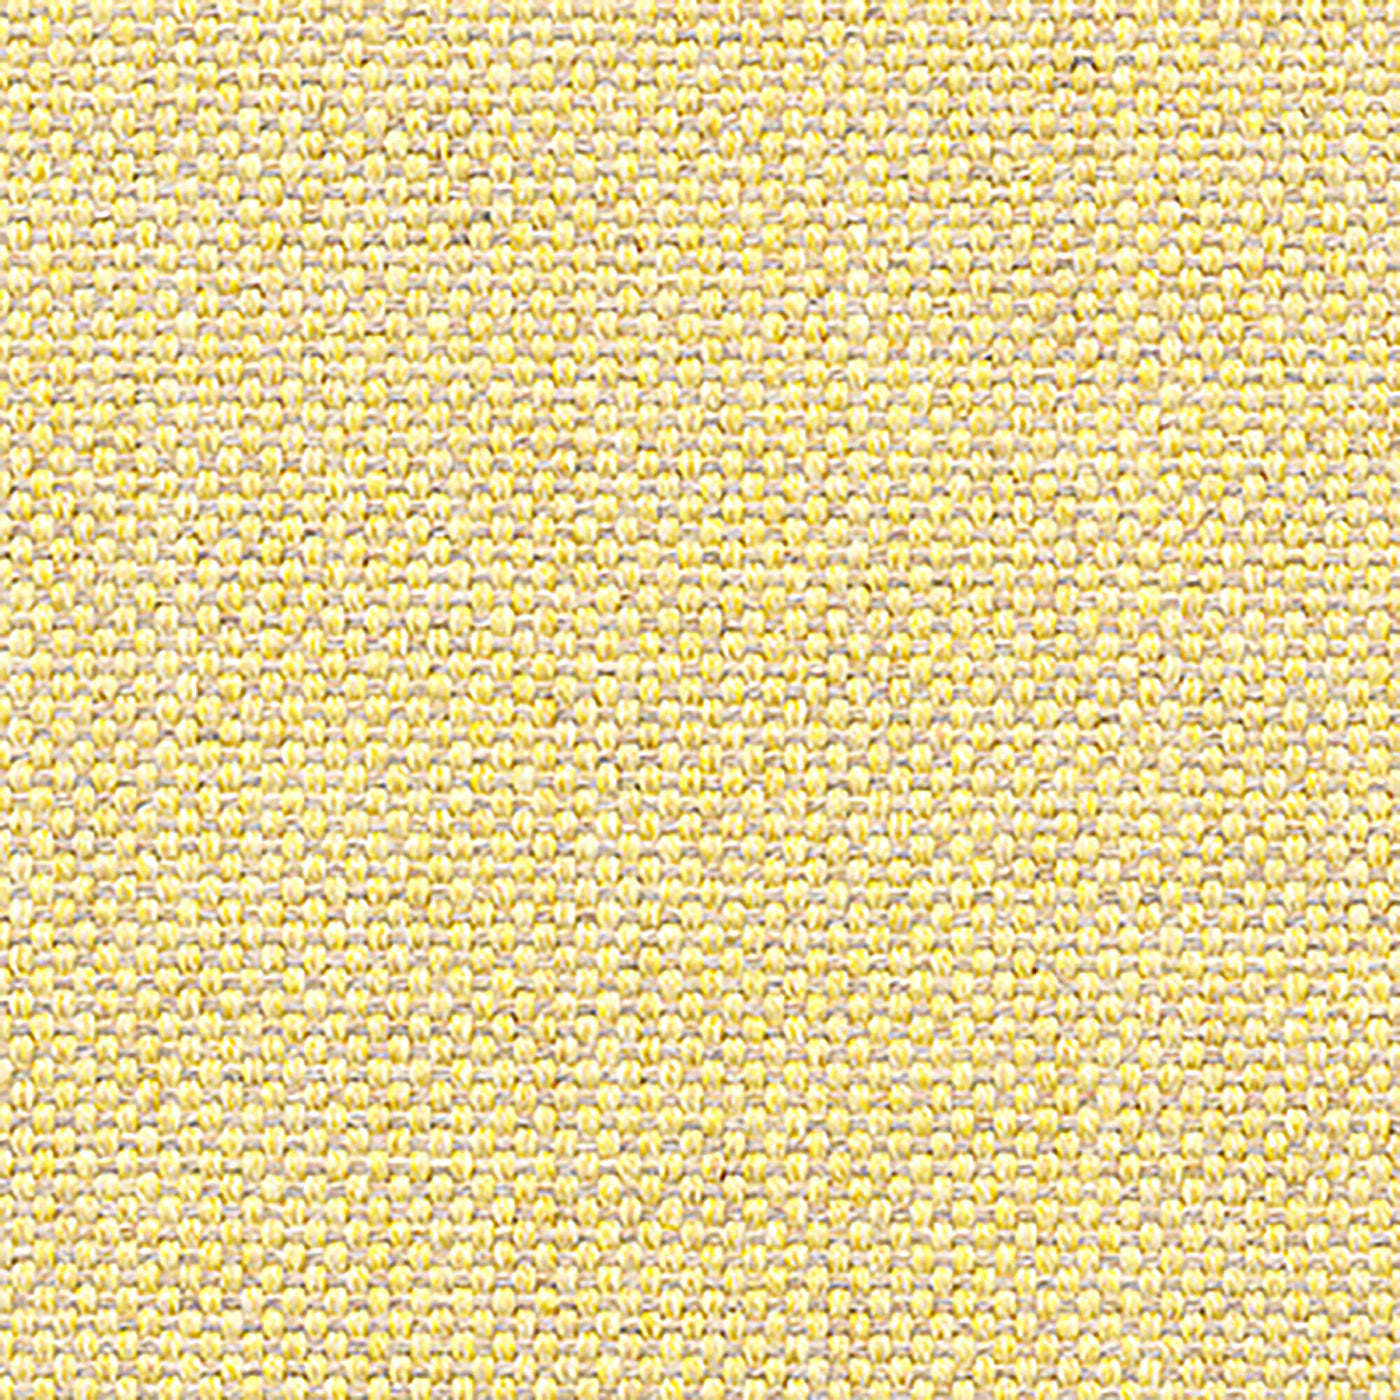 PENGI Outdoor Curtains Waterproof - Sailcloth Yellow